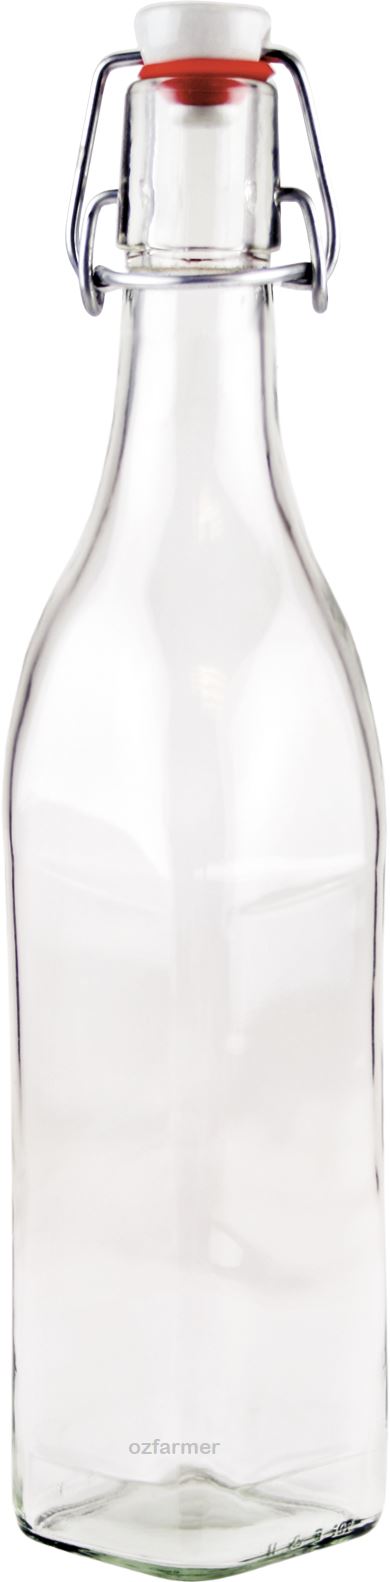 1 x 500ml Rex Juice Bottle with Swing Top Lid - Ball Mason Australia